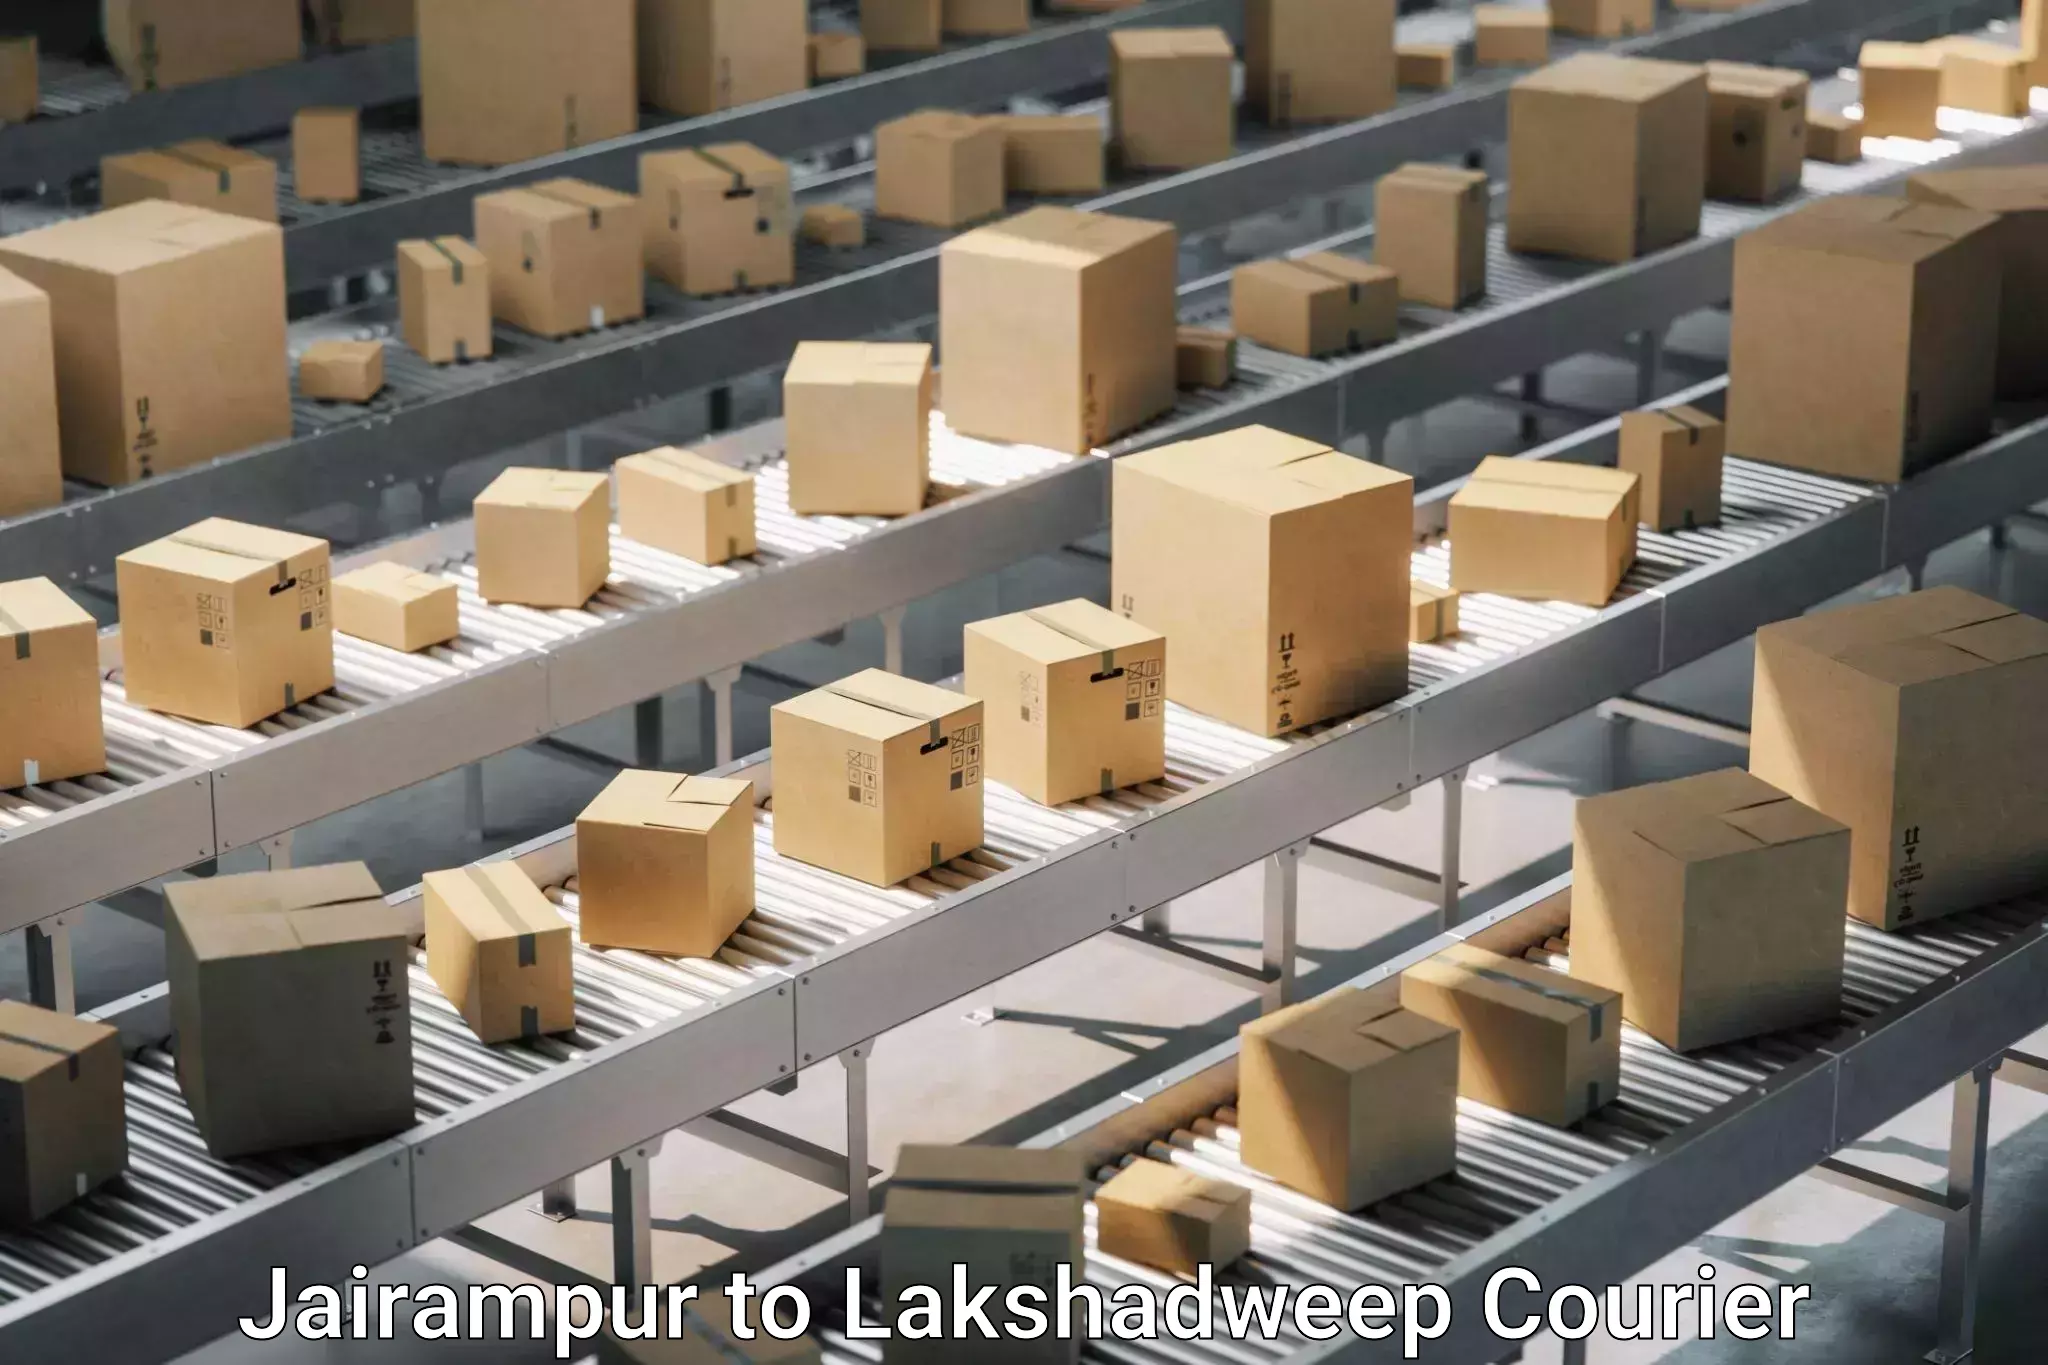 Furniture delivery service Jairampur to Lakshadweep